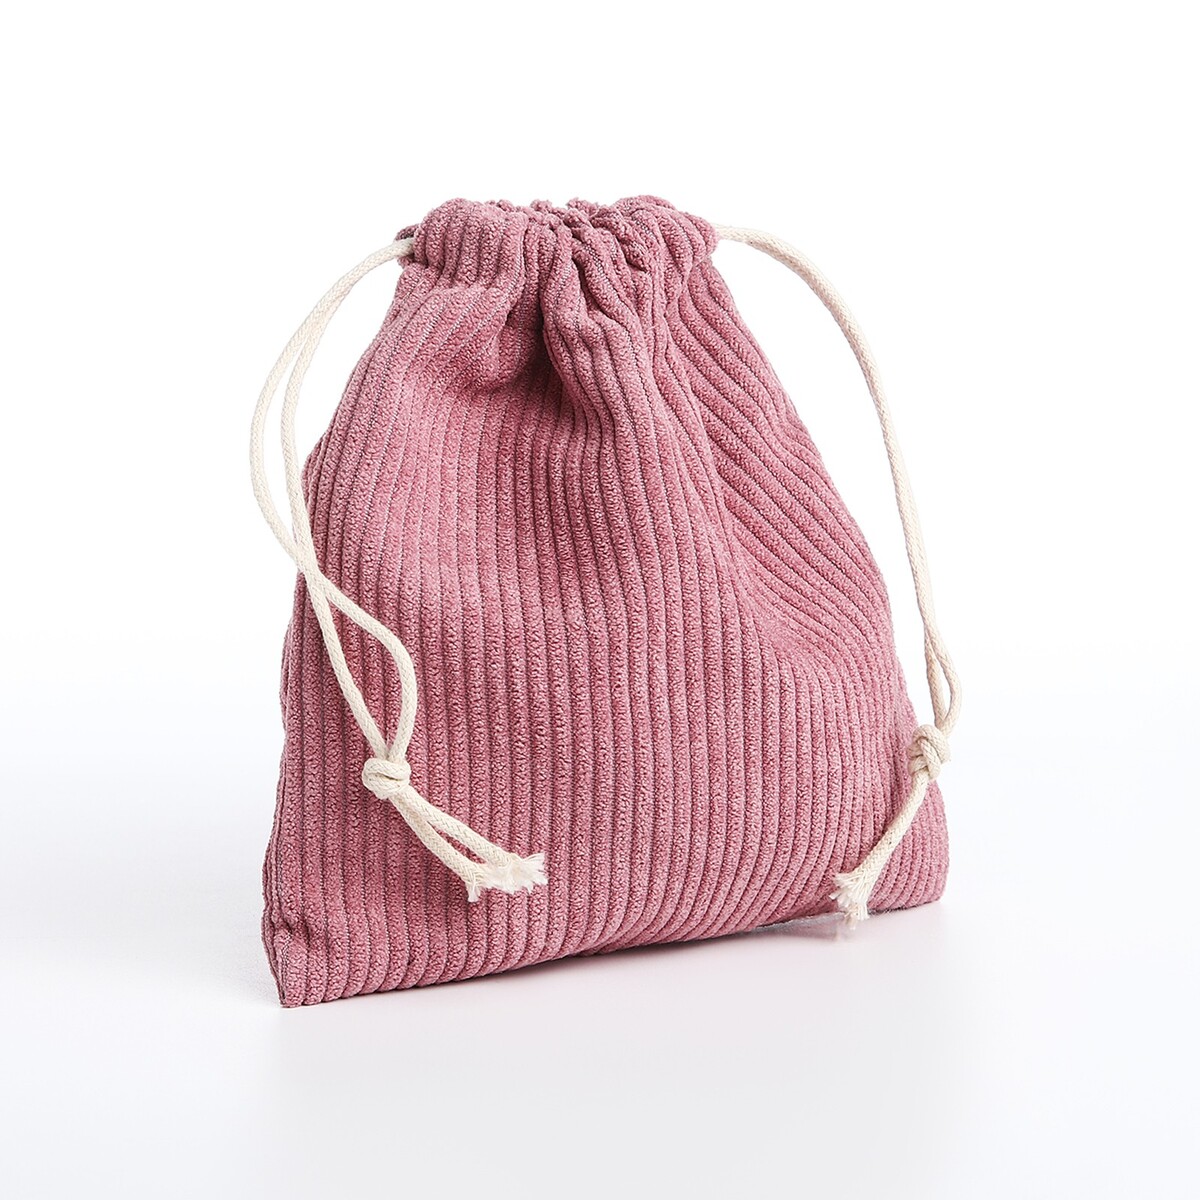 Косметичка - мешок с завязками, цвет сиренево-розовый No brand